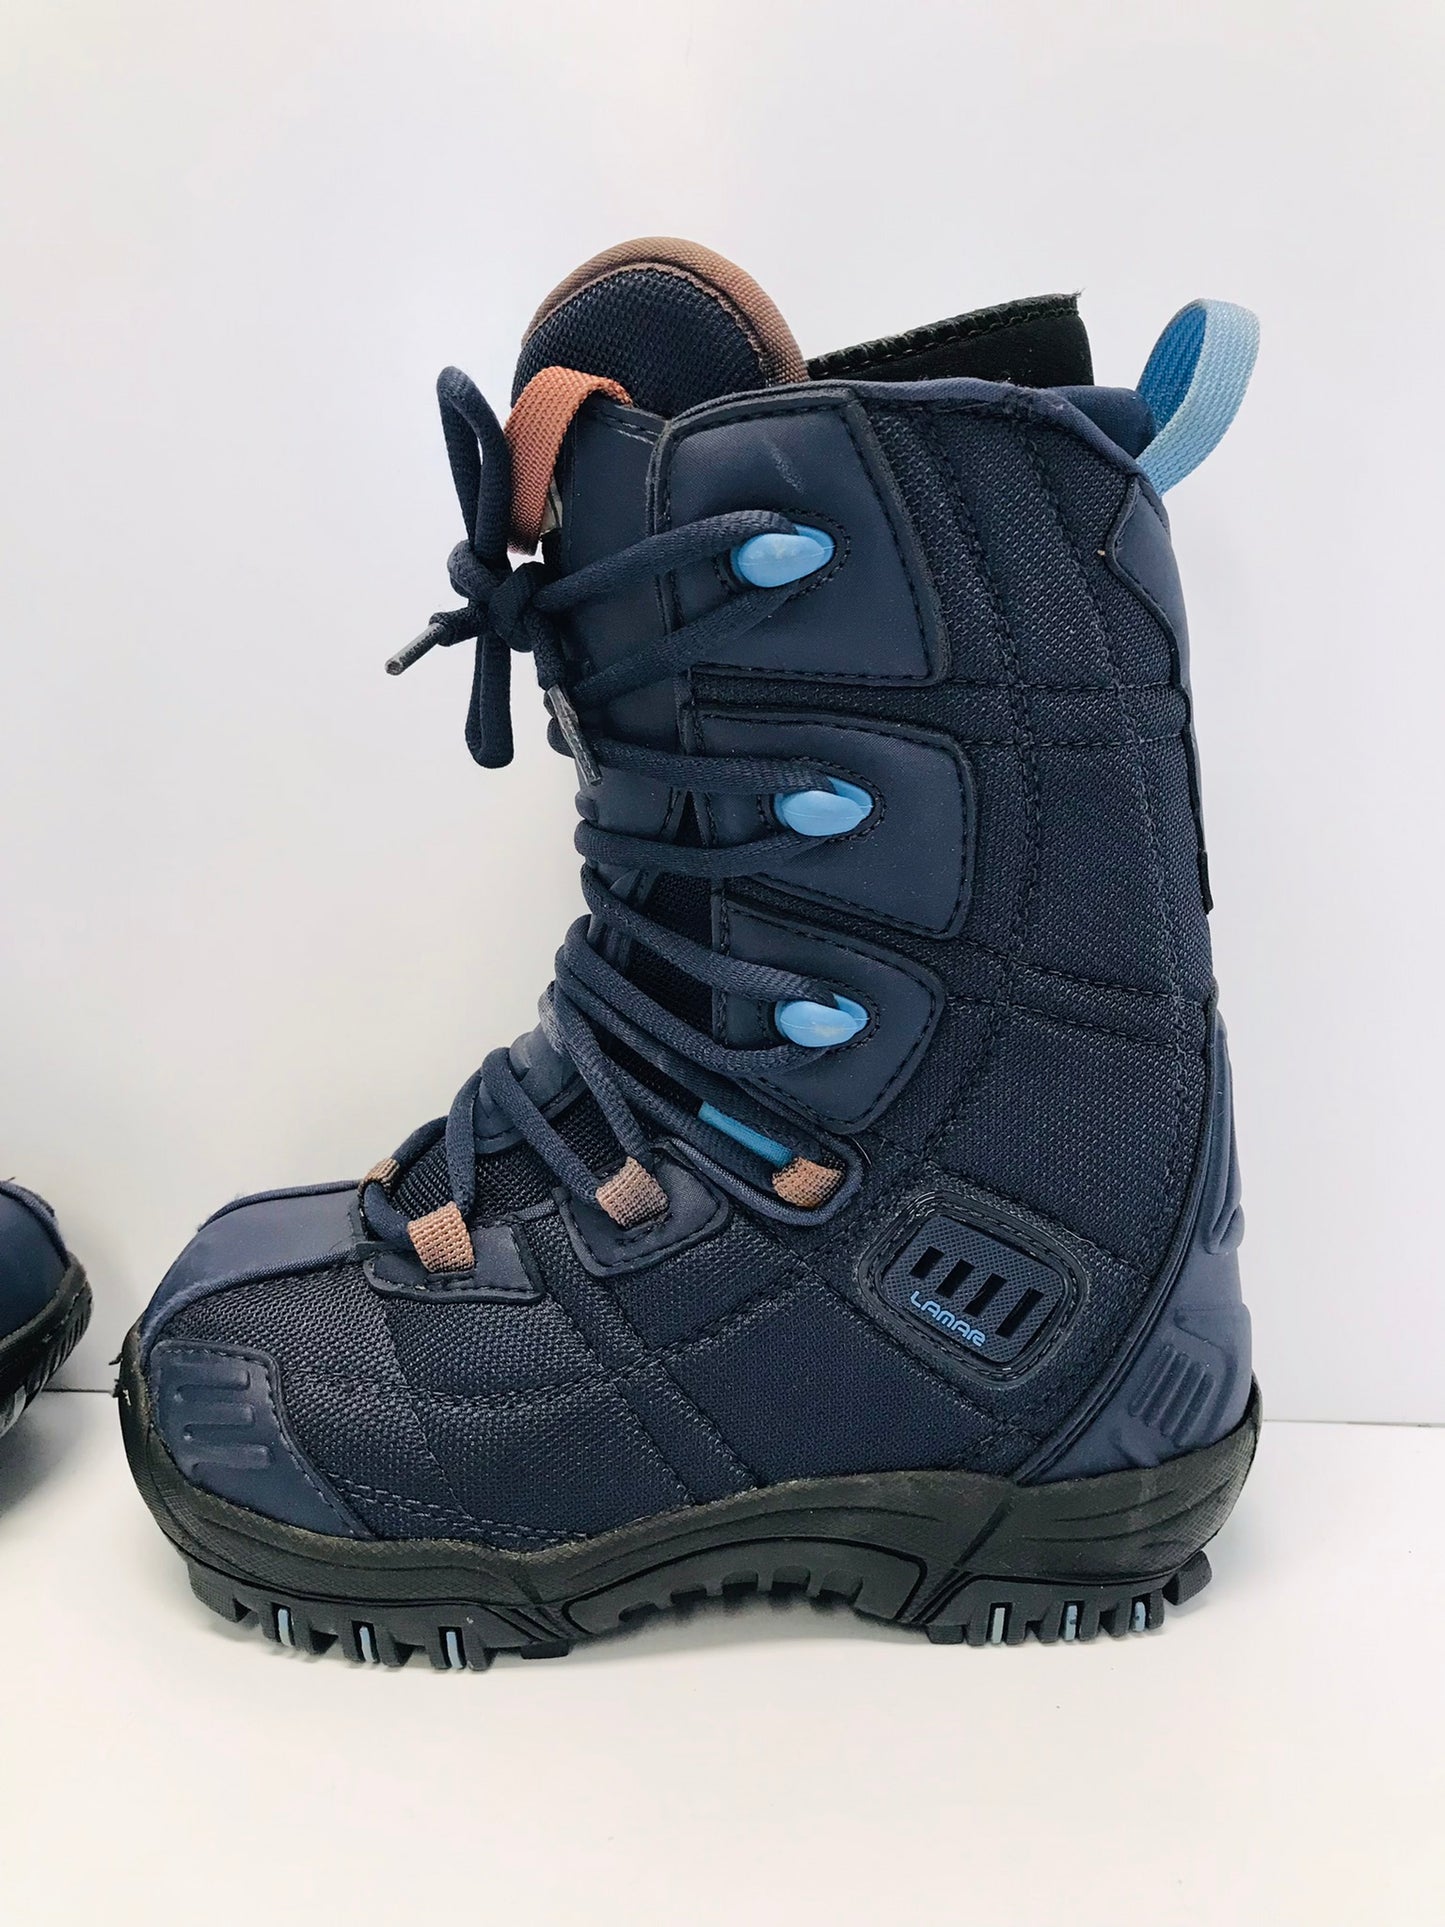 Snowboarding Boots Child Size 3 Lamar Blue New Demo Model